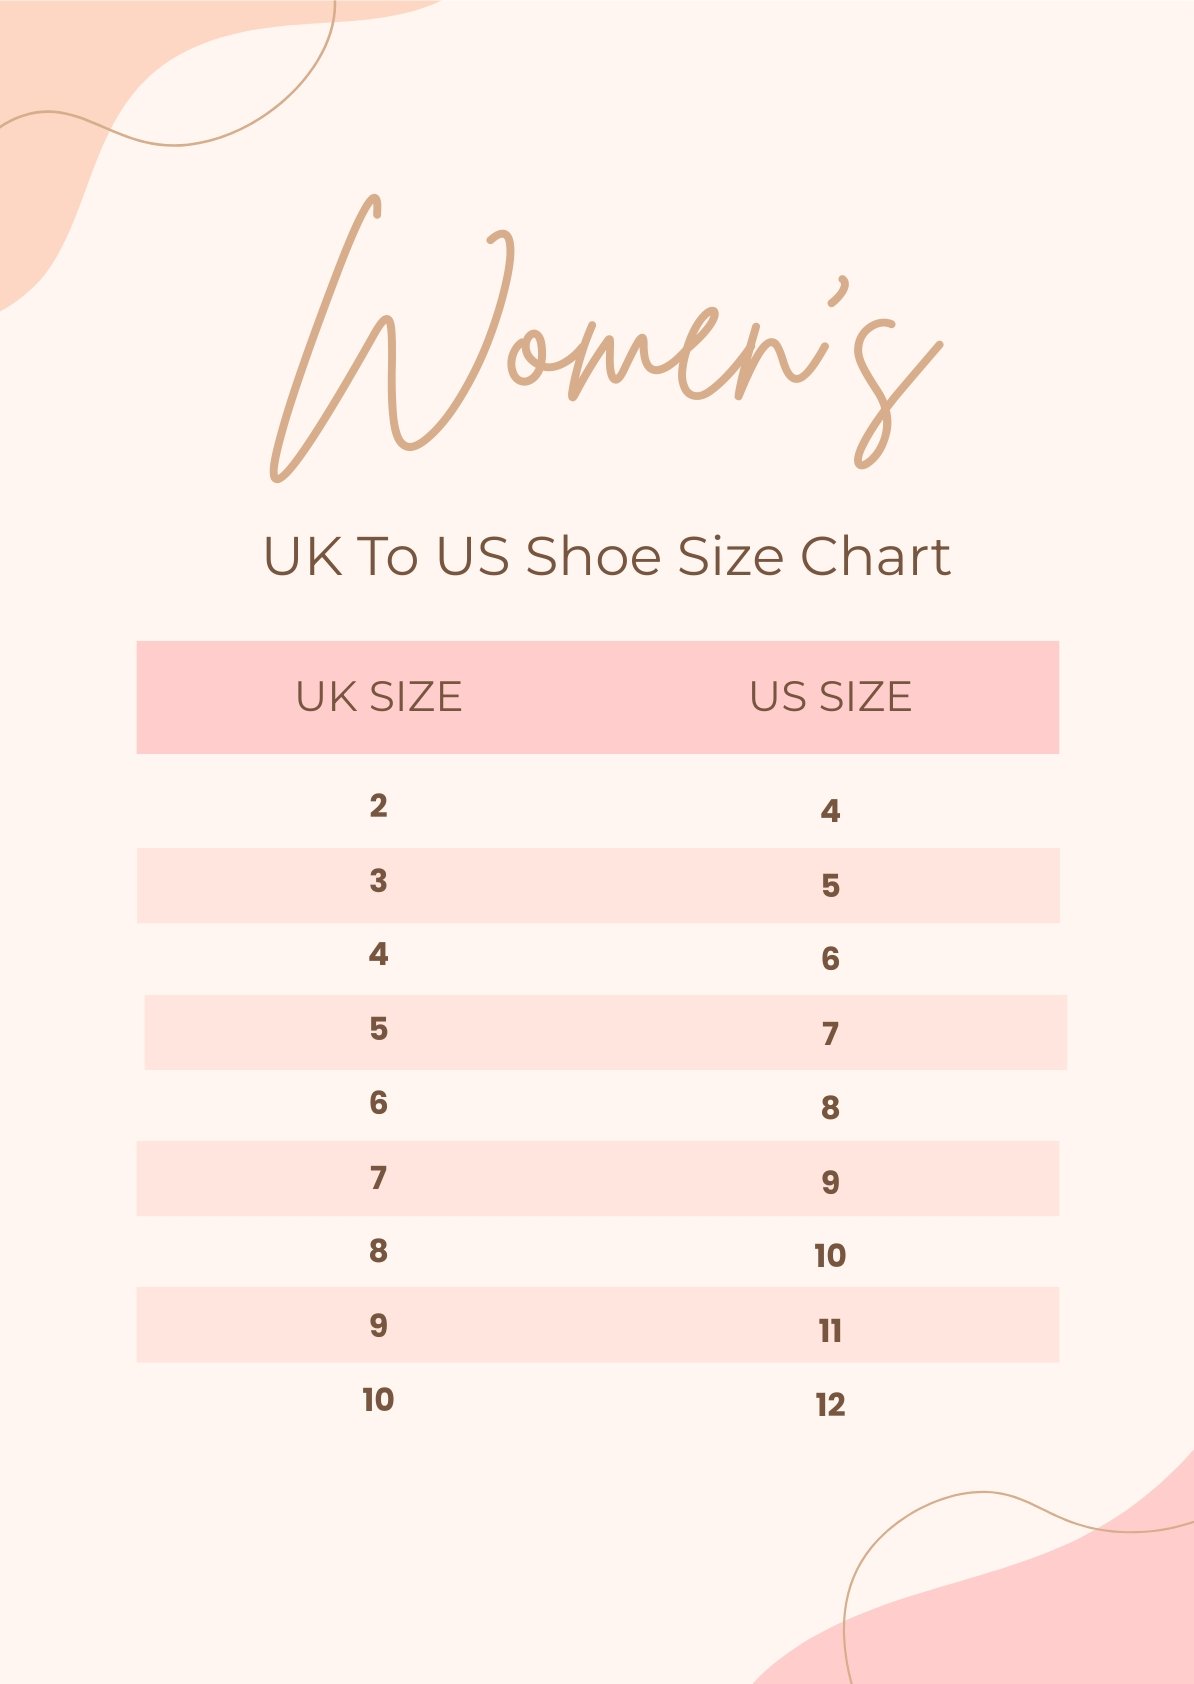 Free Women's Uk To Us Shoe Size Chart